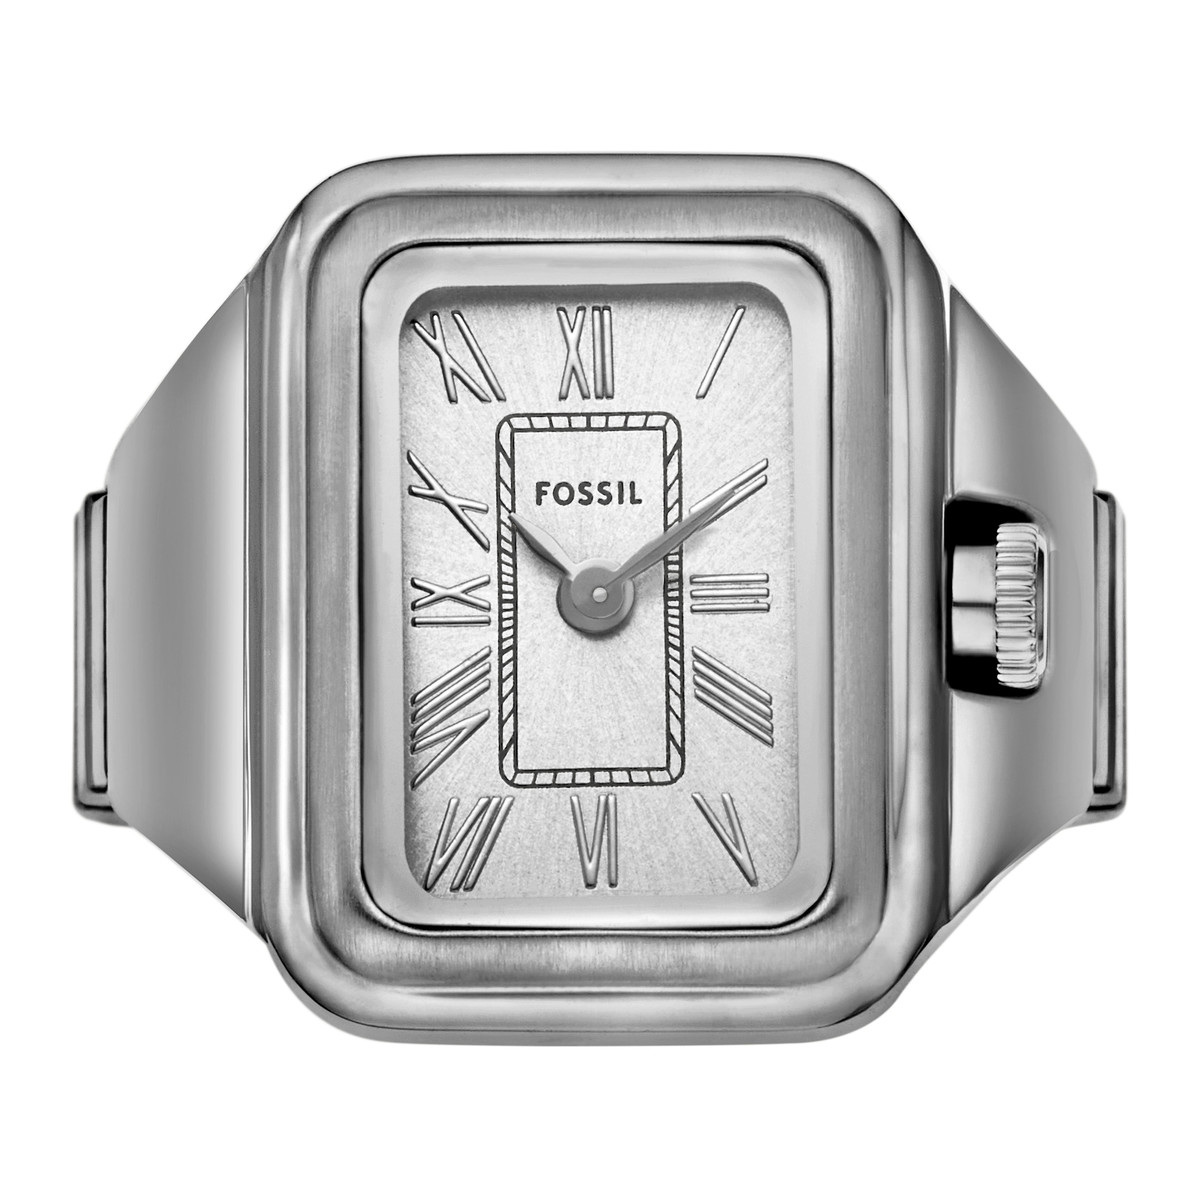 Montre FOSSIL watch ring femme bracelet acier inoxydable argent - vue 3